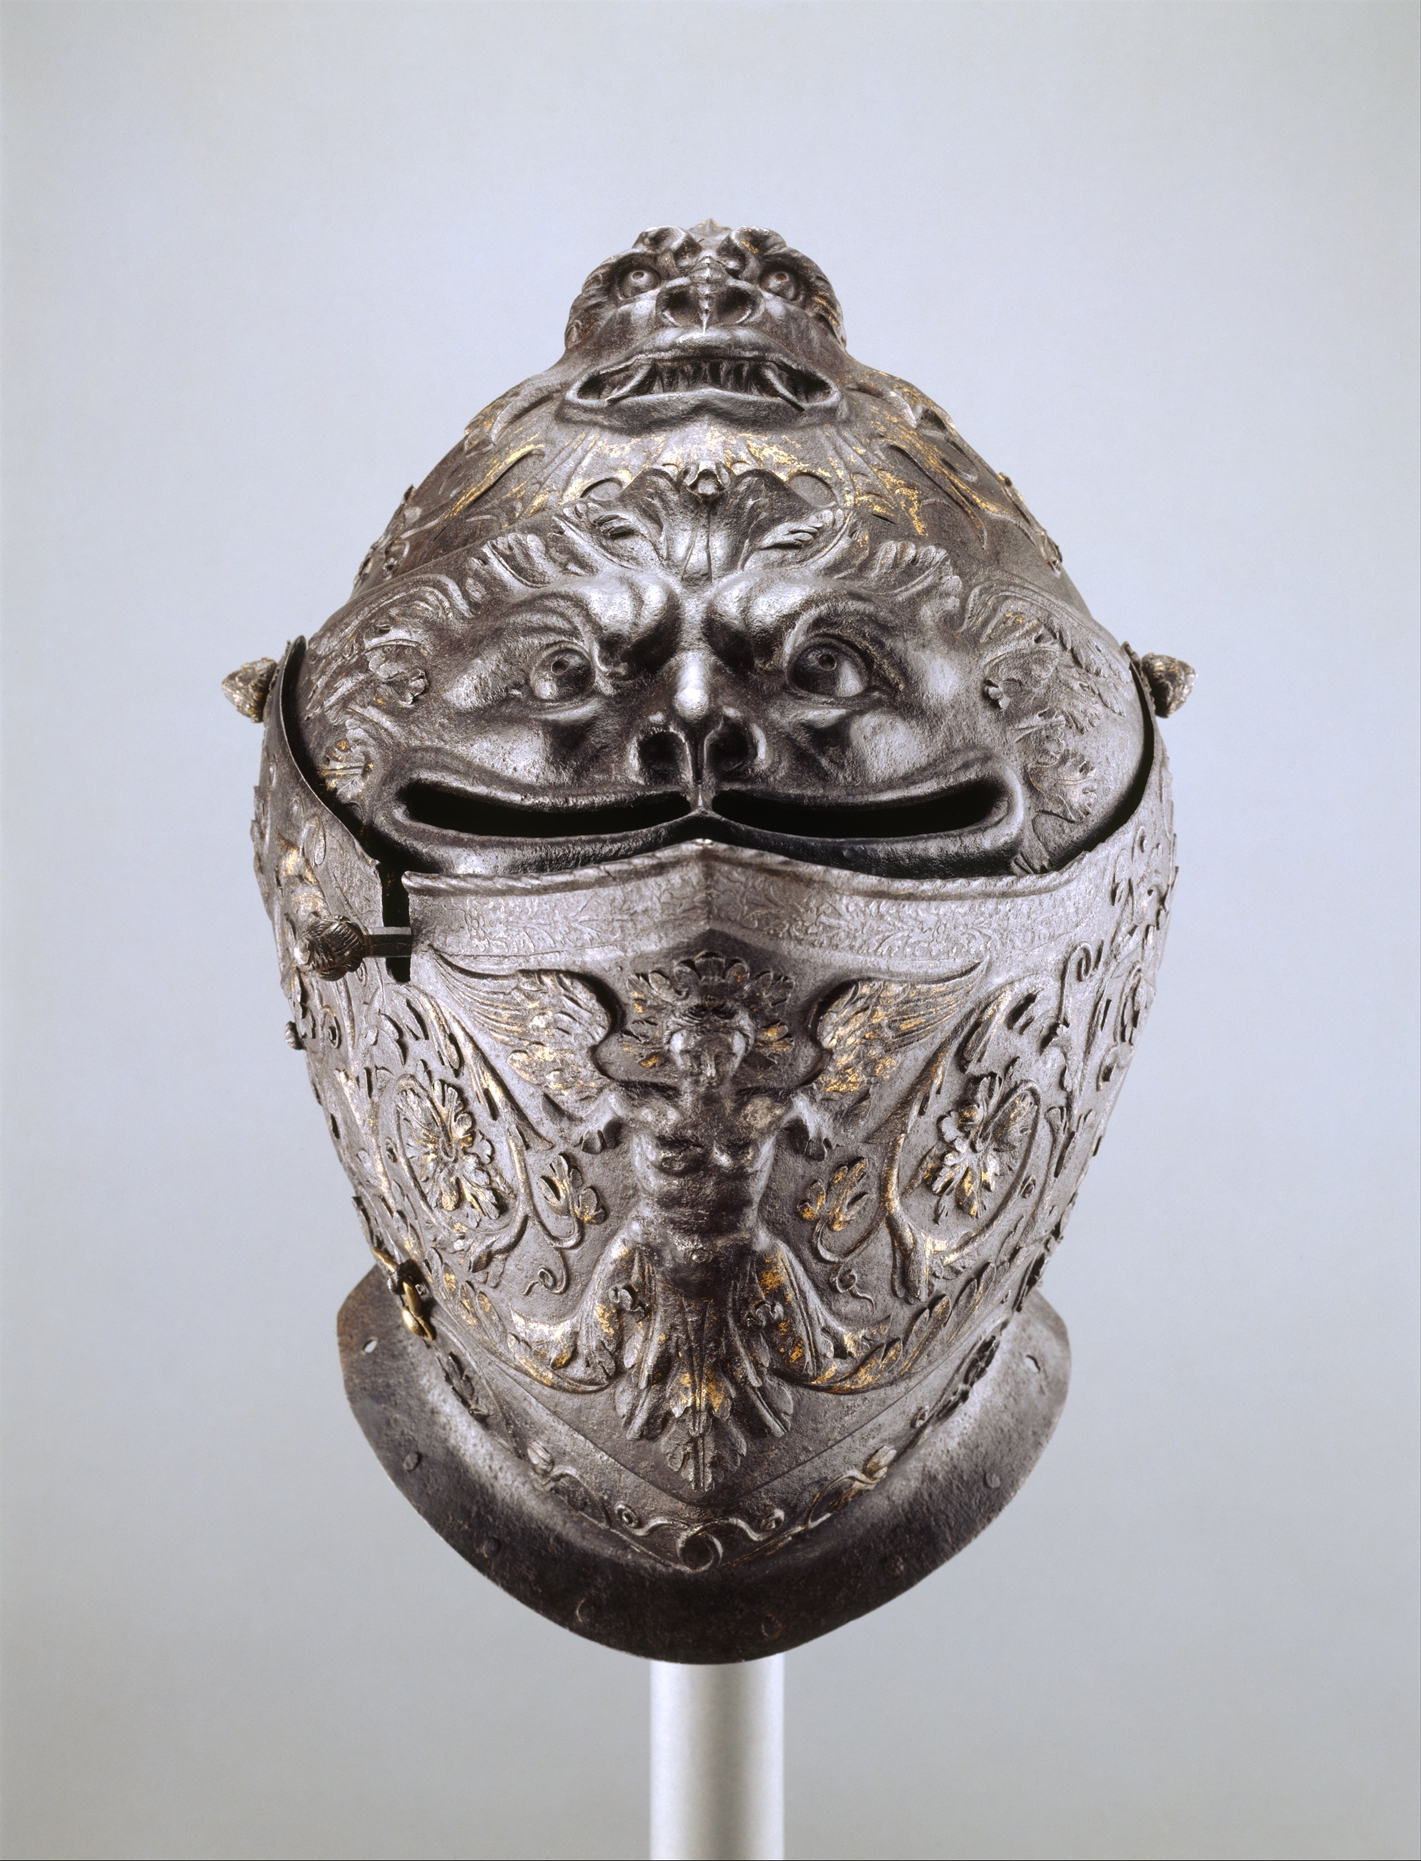 Attributed to Giovan Paolo The Helmet of Museum Art | Milan Italian, Metropolitan Negroli Close | 